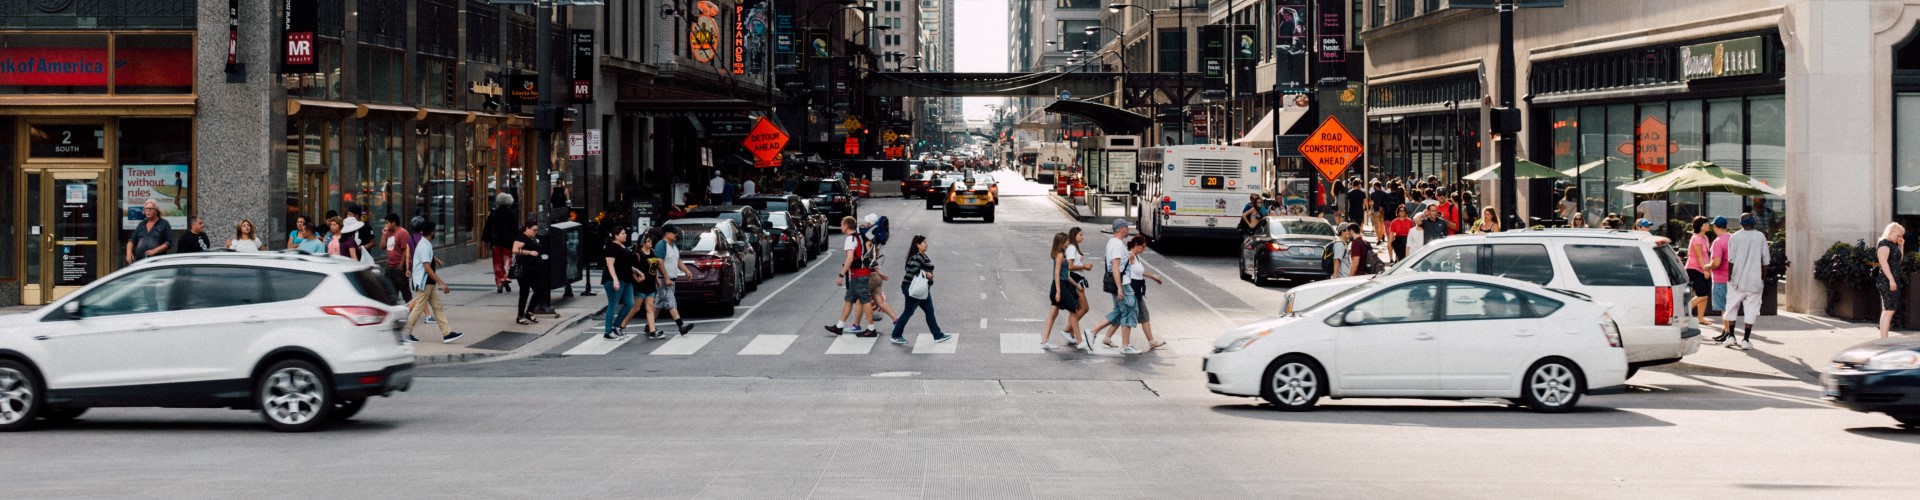 Pedestrians on a busy city street